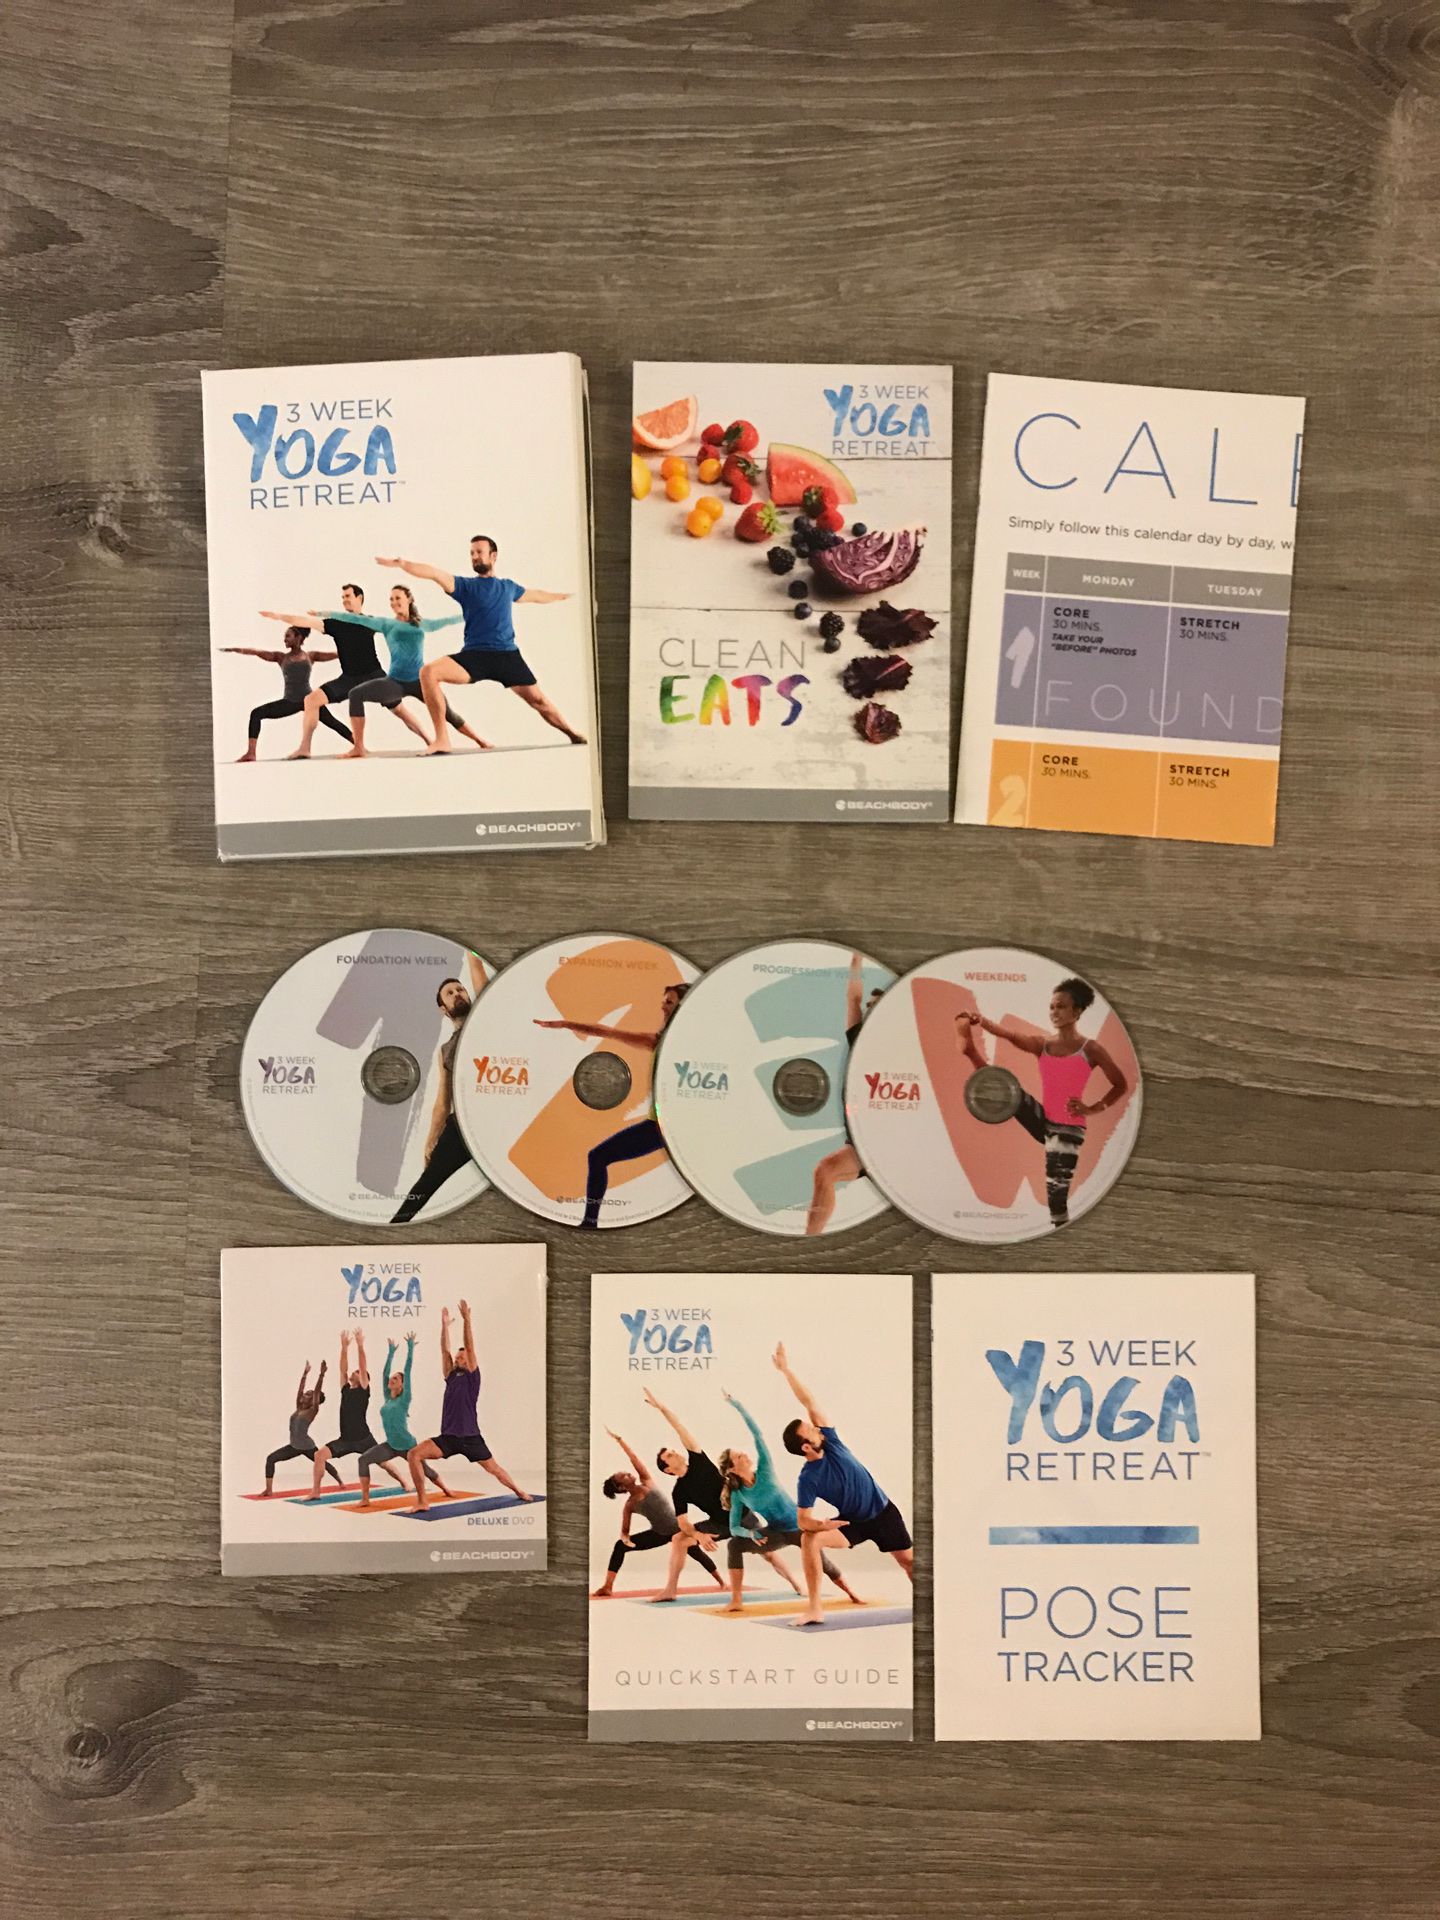 3 Week Yoga Retreat (5 DVD Set) with Book, Poster Etc